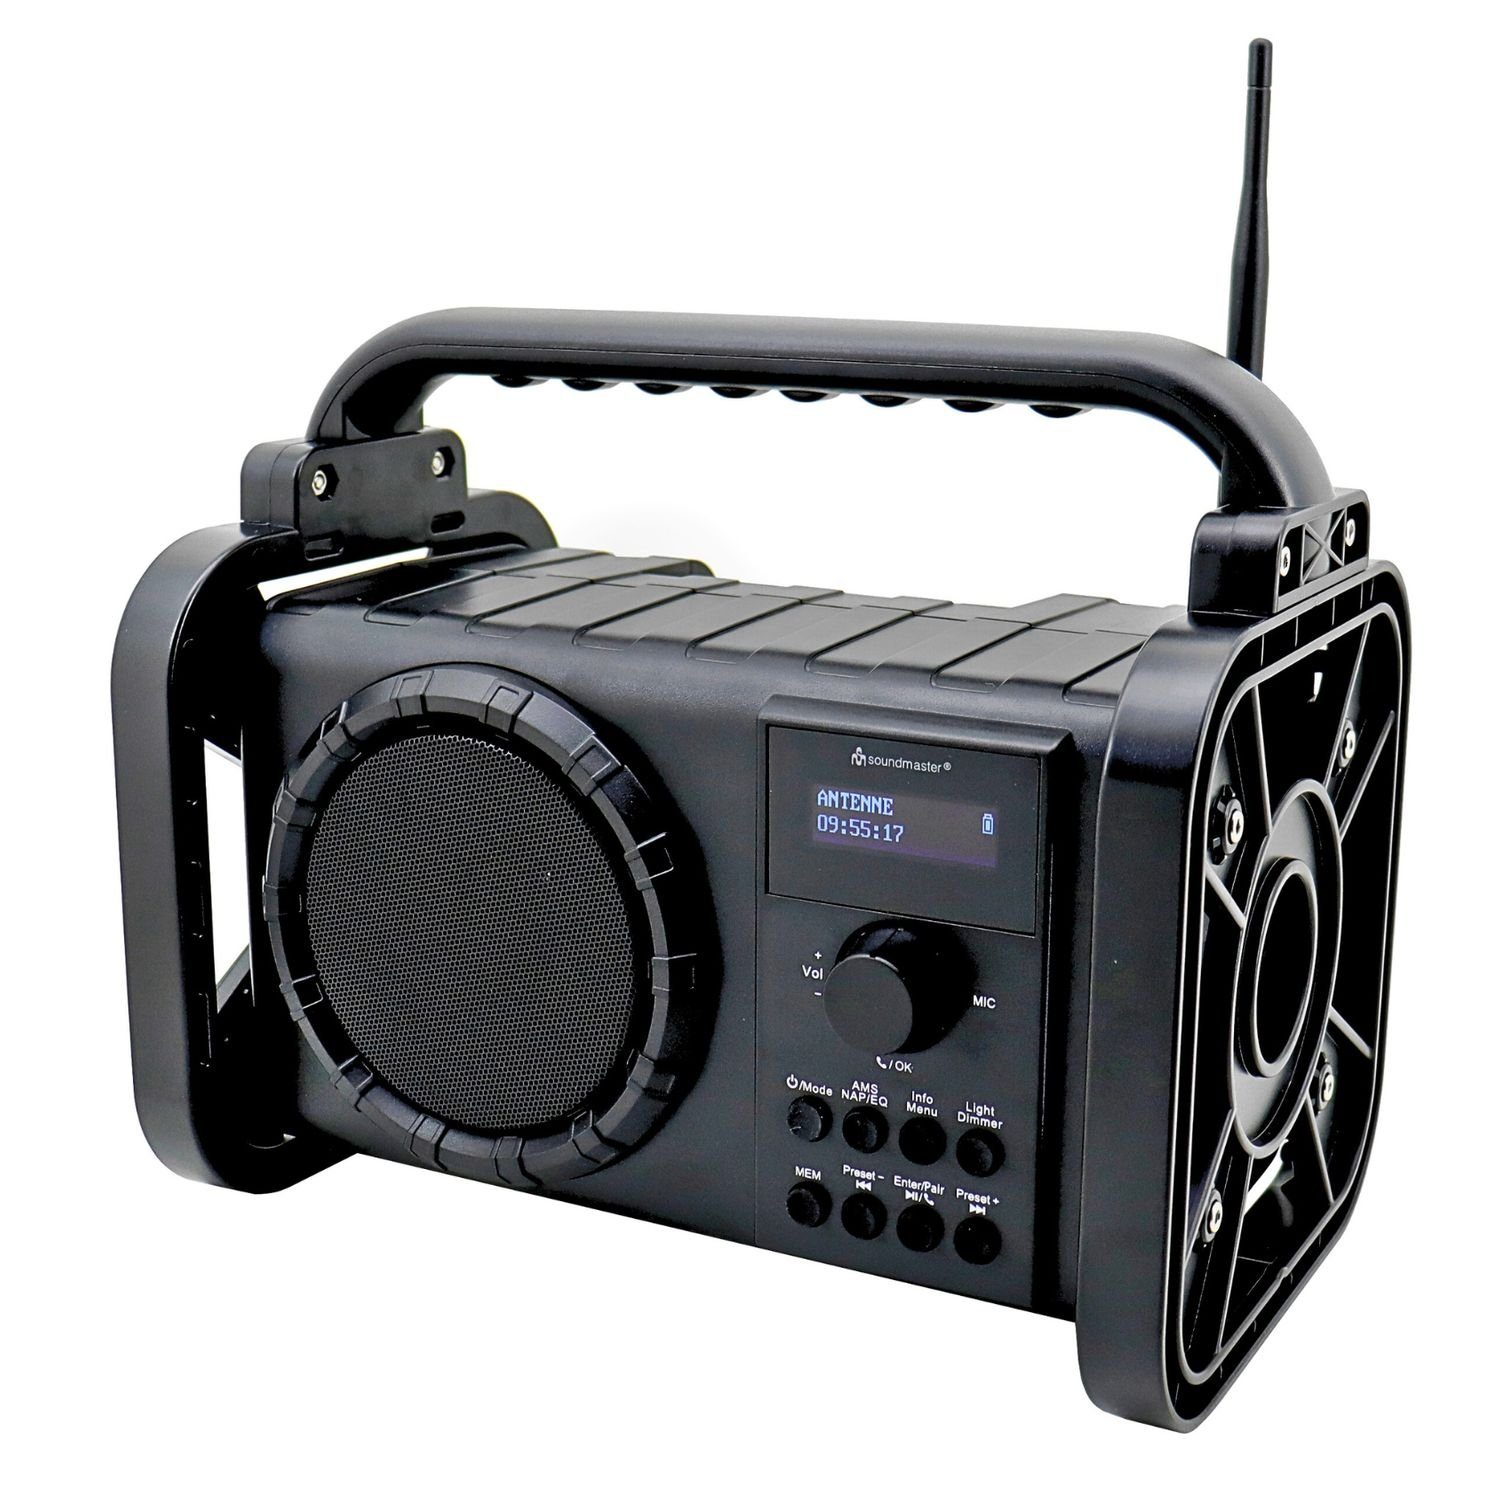 Roadstar Kassettenradio Bluetooth®, Kassette, SD, USB Aufnahmefunktion,  Fühlbare Tasten Schwarz